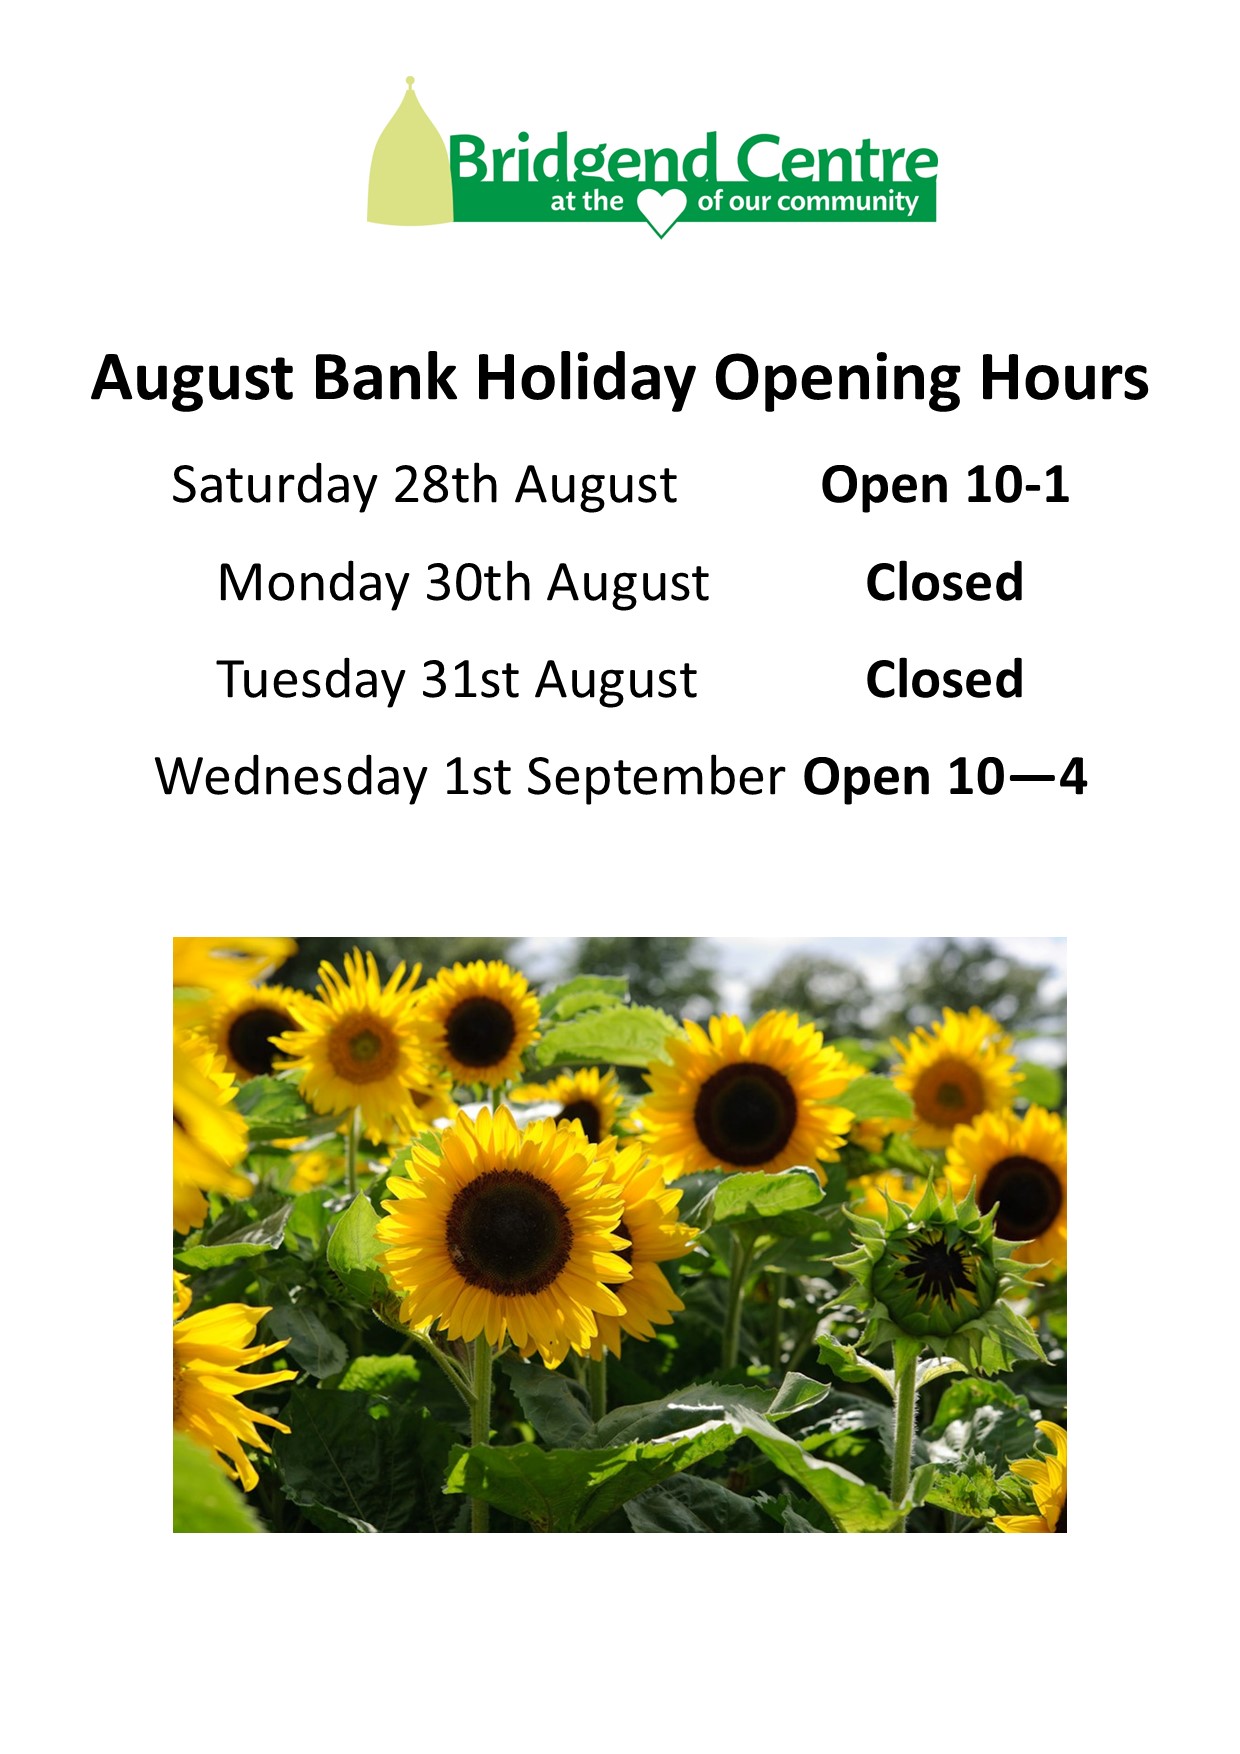 bank-holiday-weekend-august-bridgend-centre